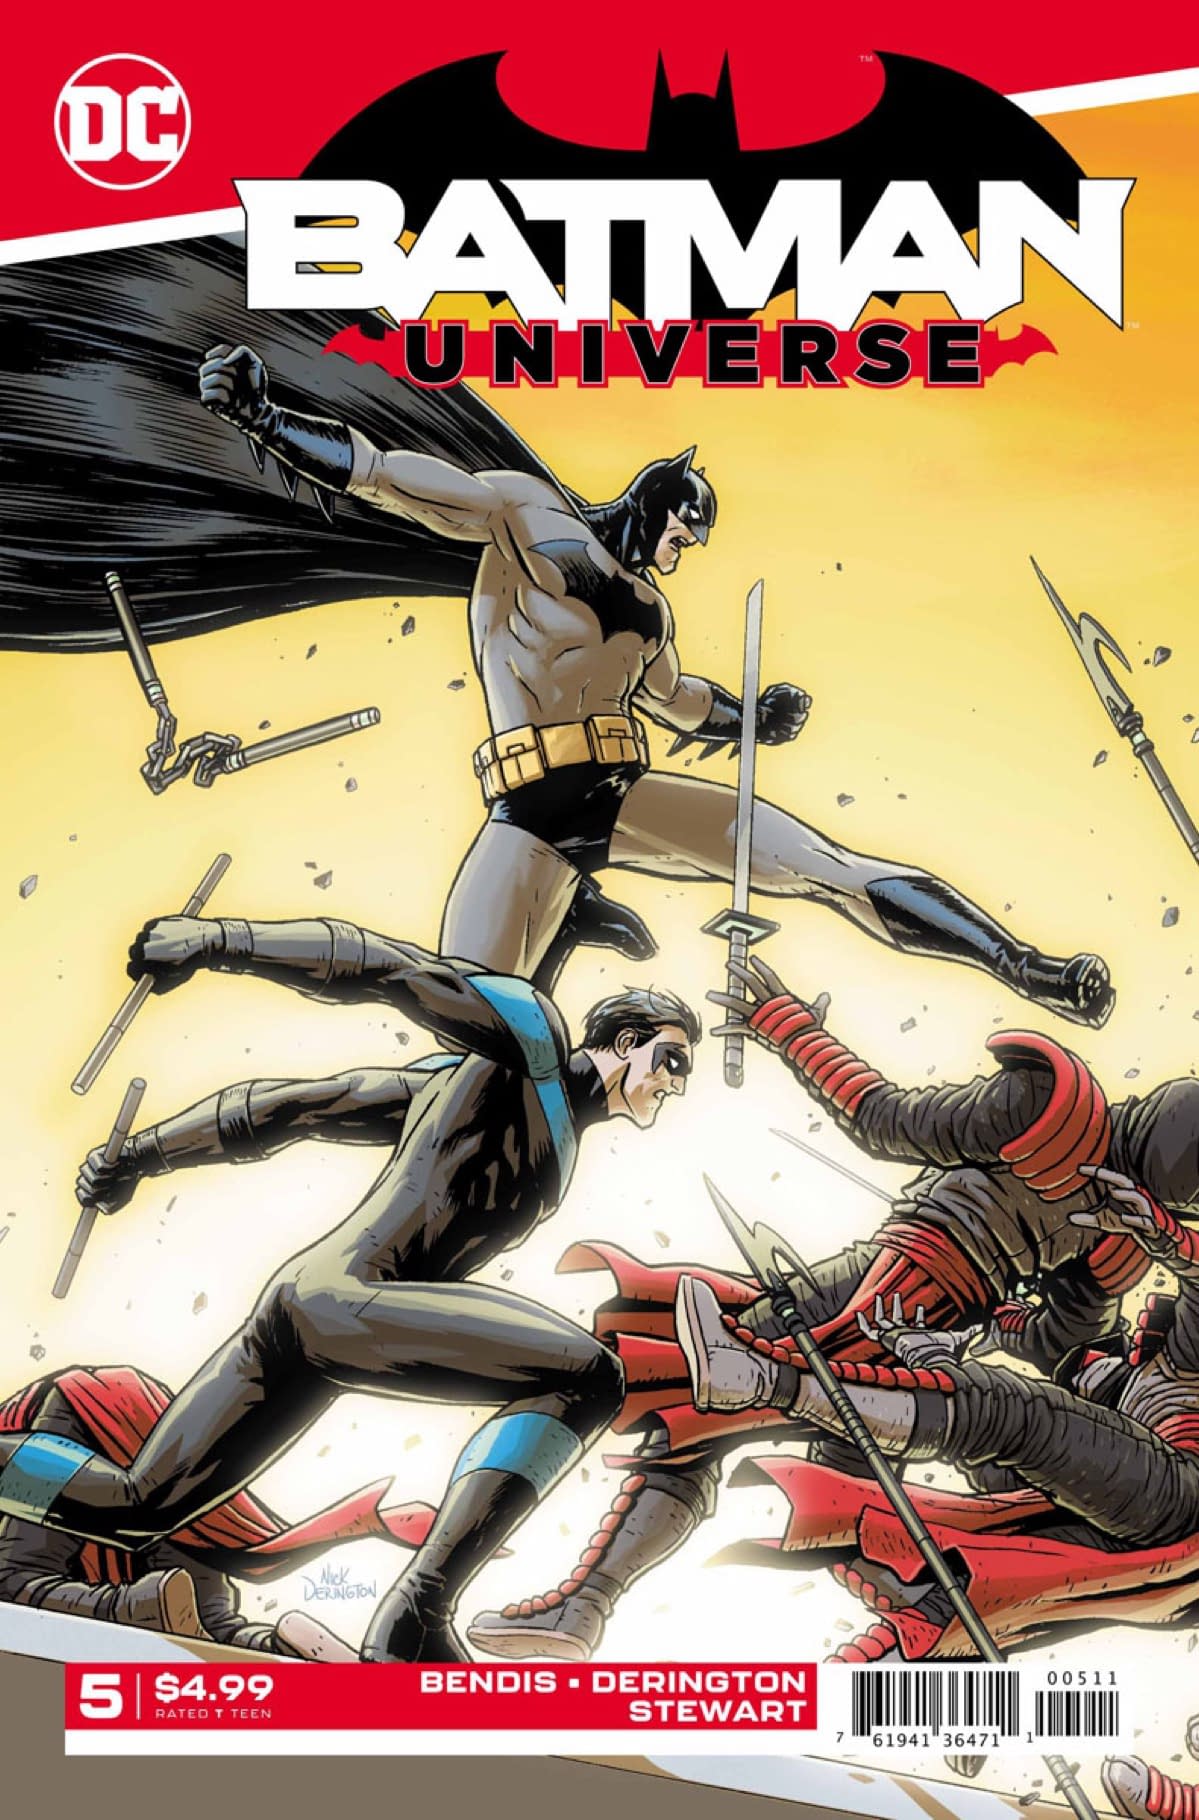 Vandal Savage Complains About Millennials in Batman Universe #5 [Preview]